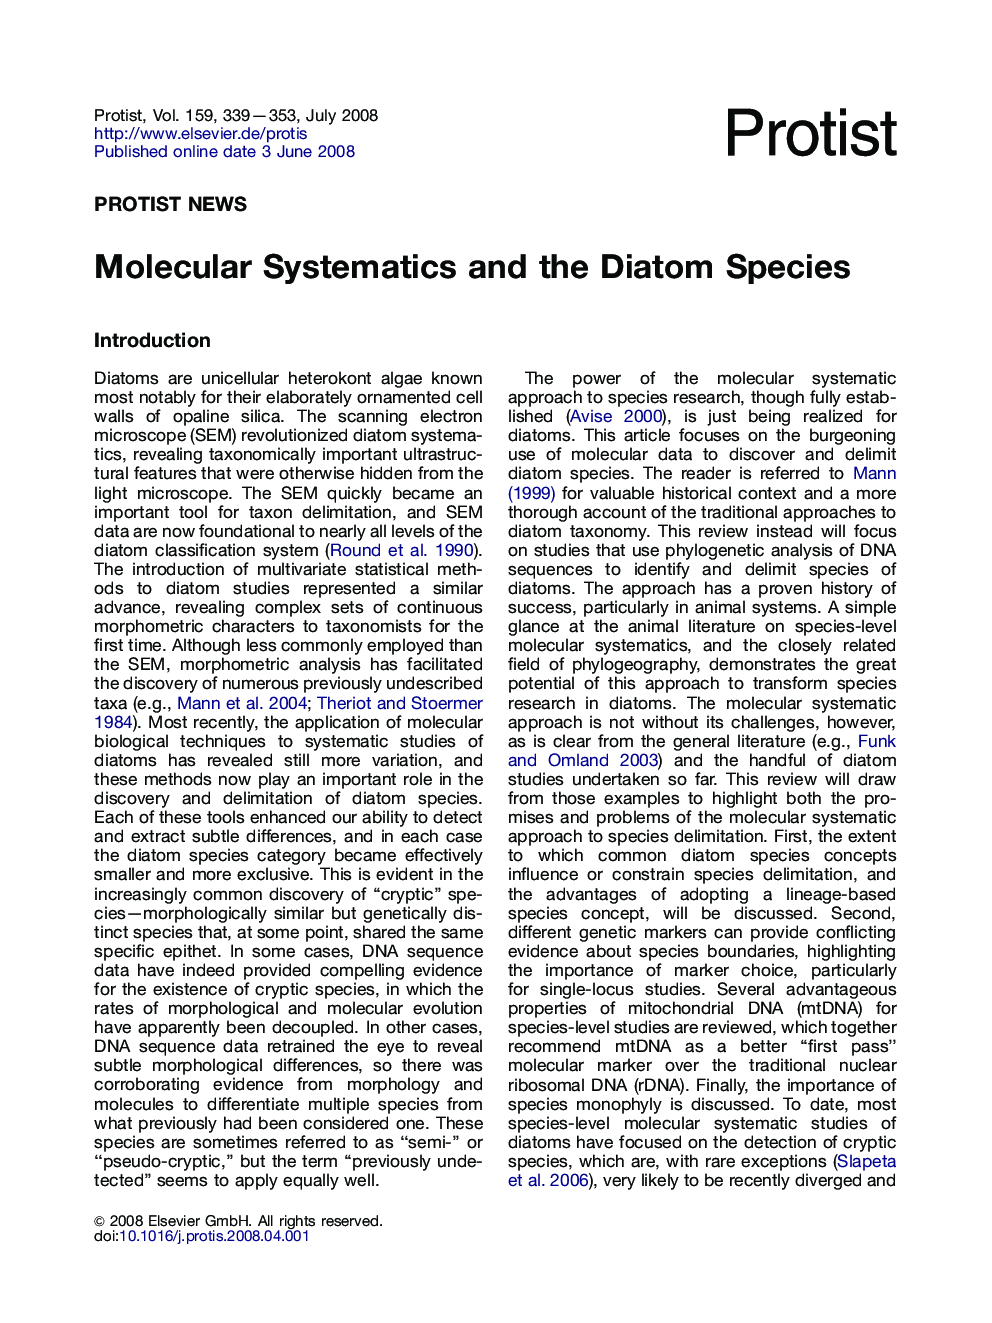 Molecular Systematics and the Diatom Species